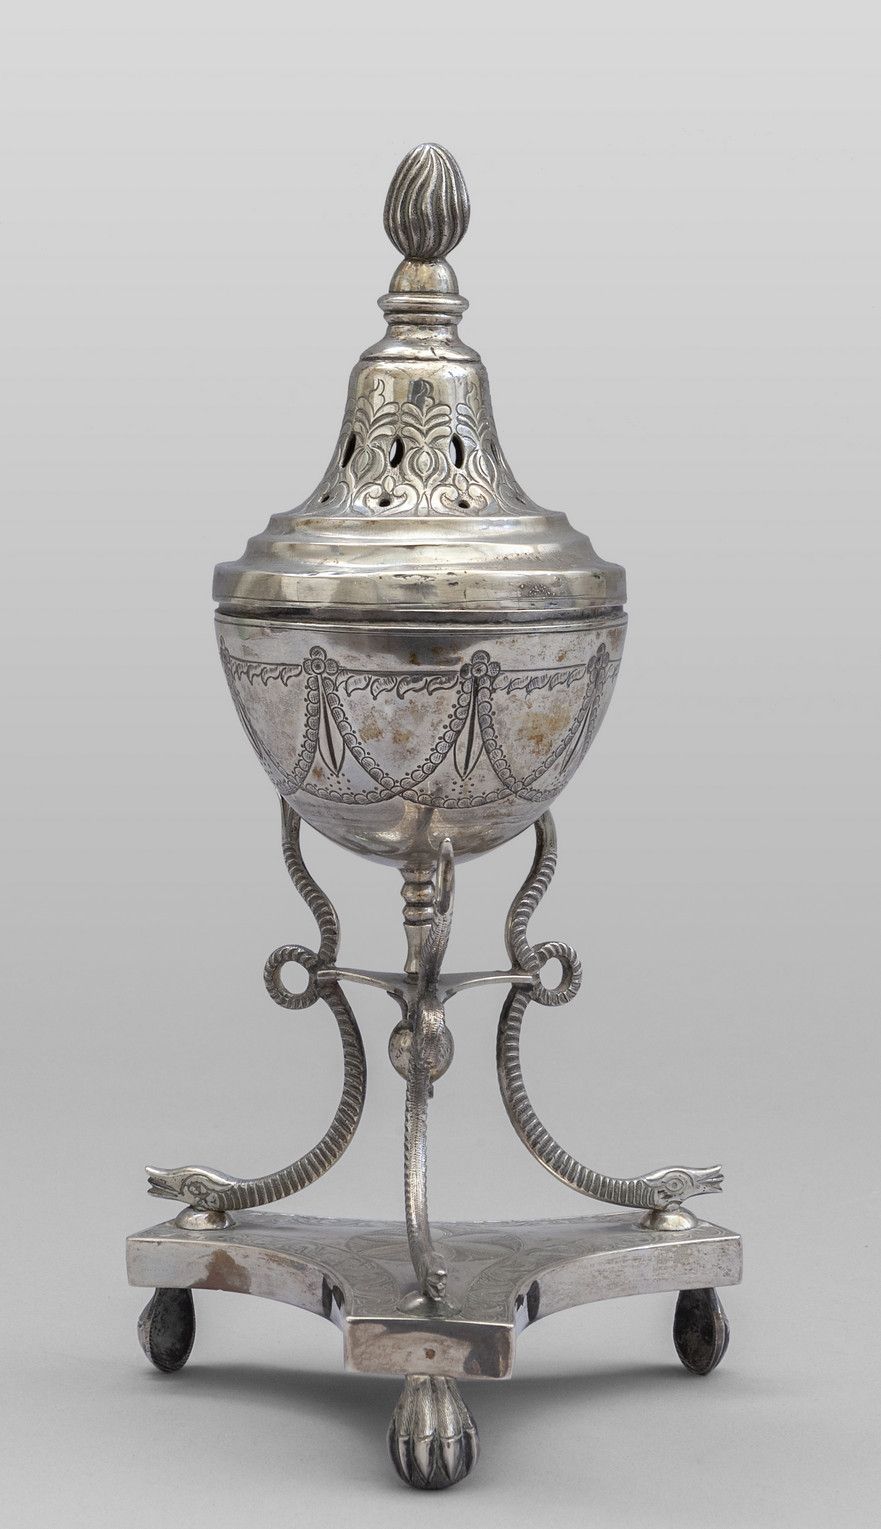 Bruciaprofumo in argento, sec.XIX 银质香水炉，19世纪
h.Cm.24